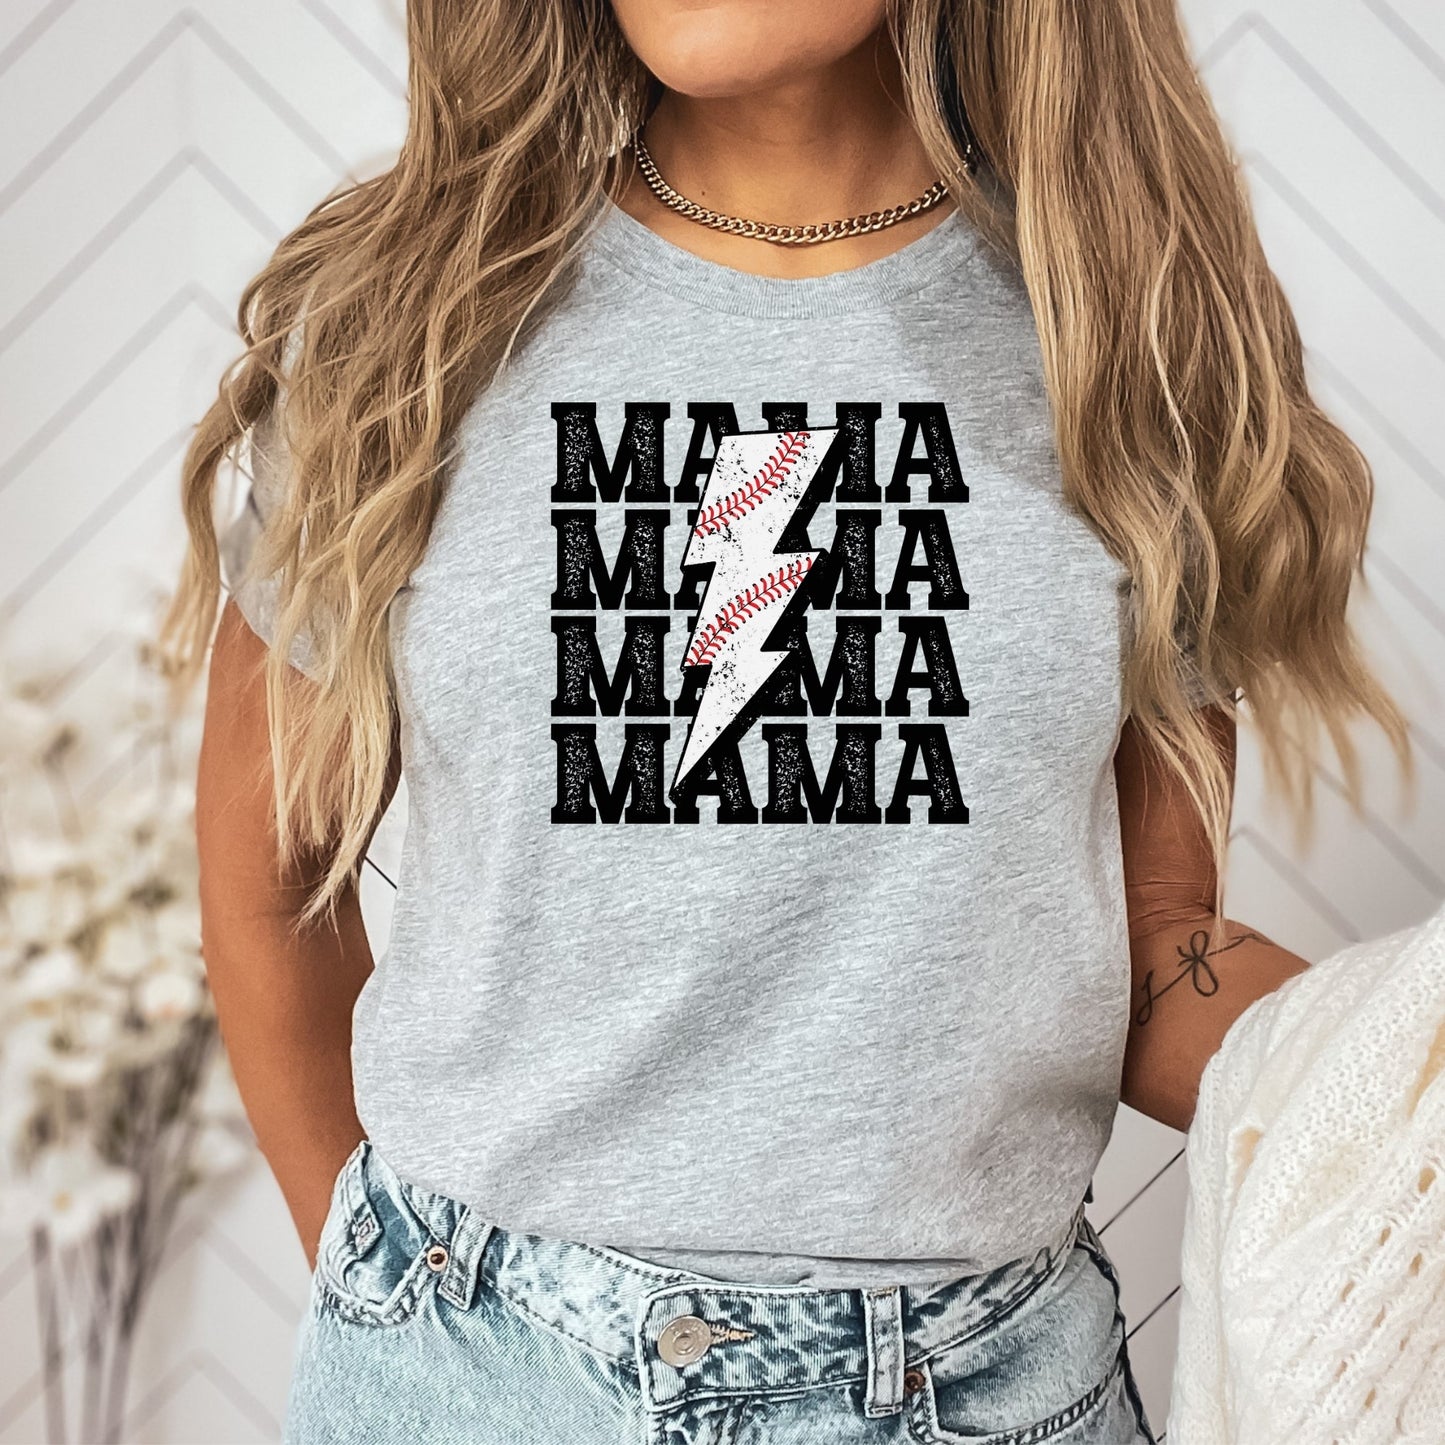 Baseball Mama Shirt